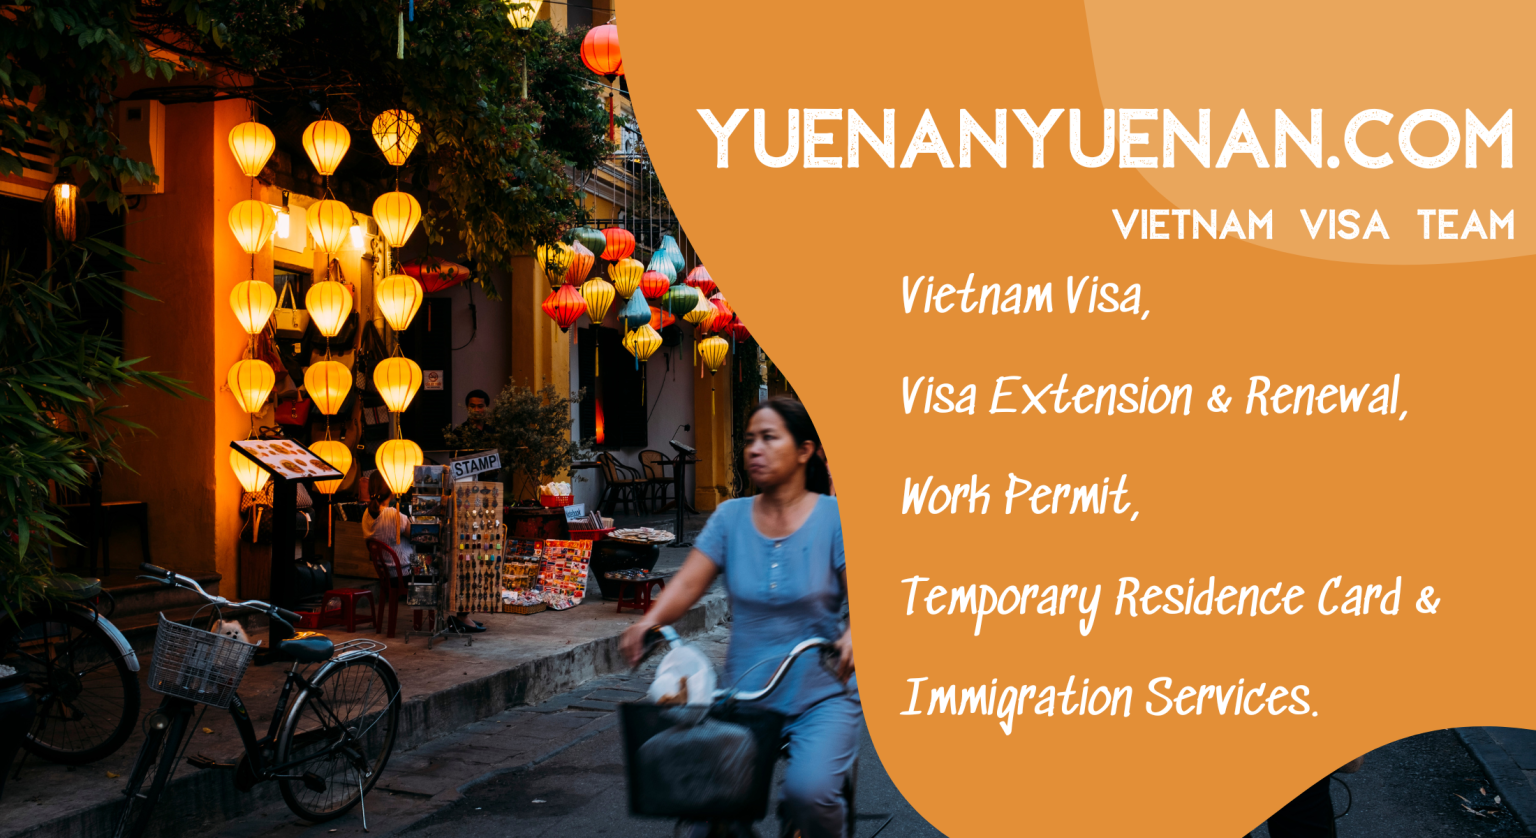 越南落地签证对照片要求 | Vietnamimmigration.com official website | e-visa & Visa ...